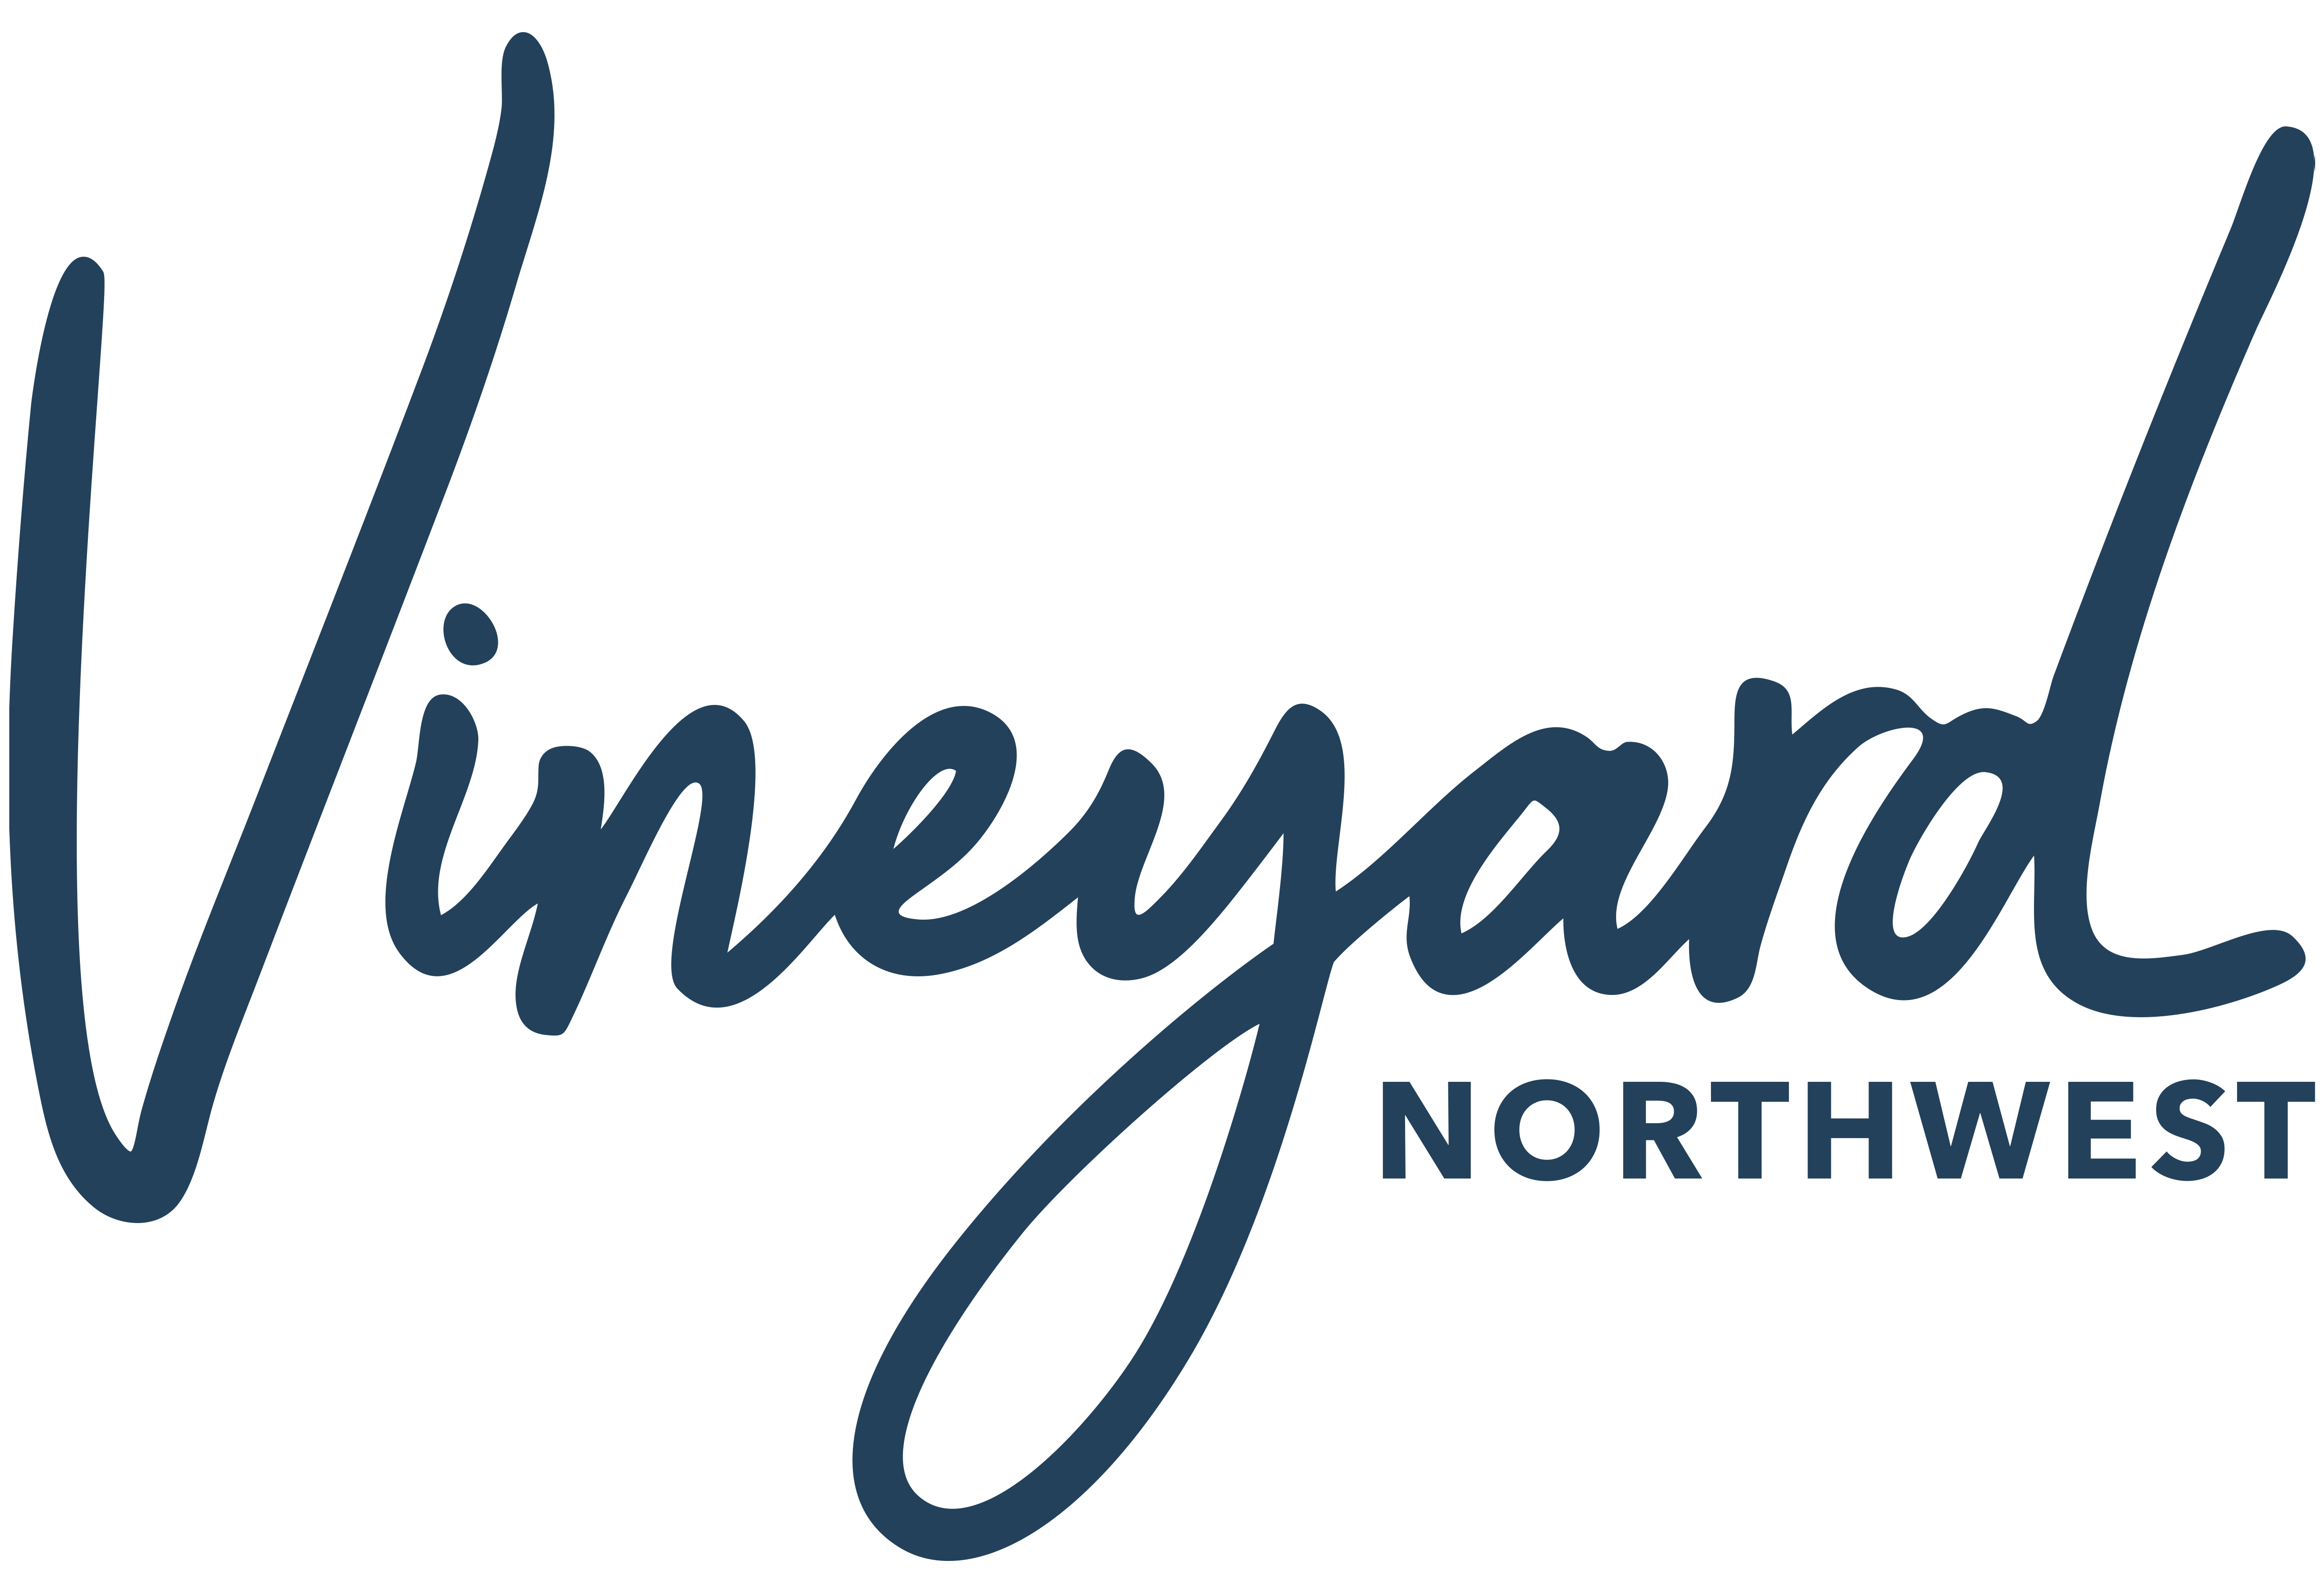 Vineyard Northwest Podcast header image 1